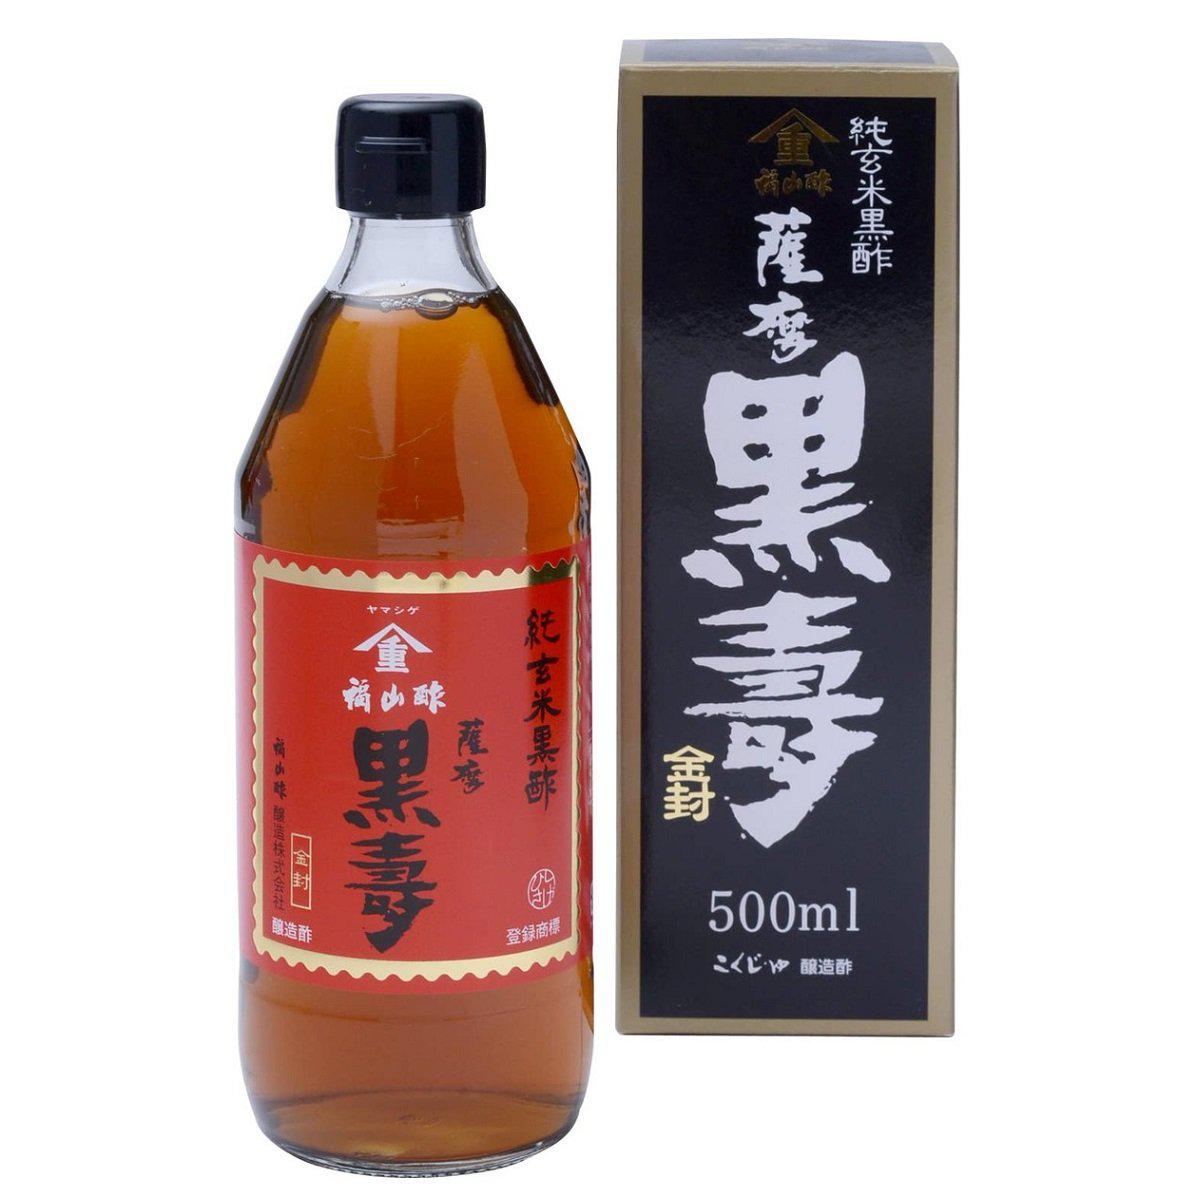 Fukuyamasu Kurozu Artisan 2+ Years Aged Japanese Black Rice Vinegar 500ml